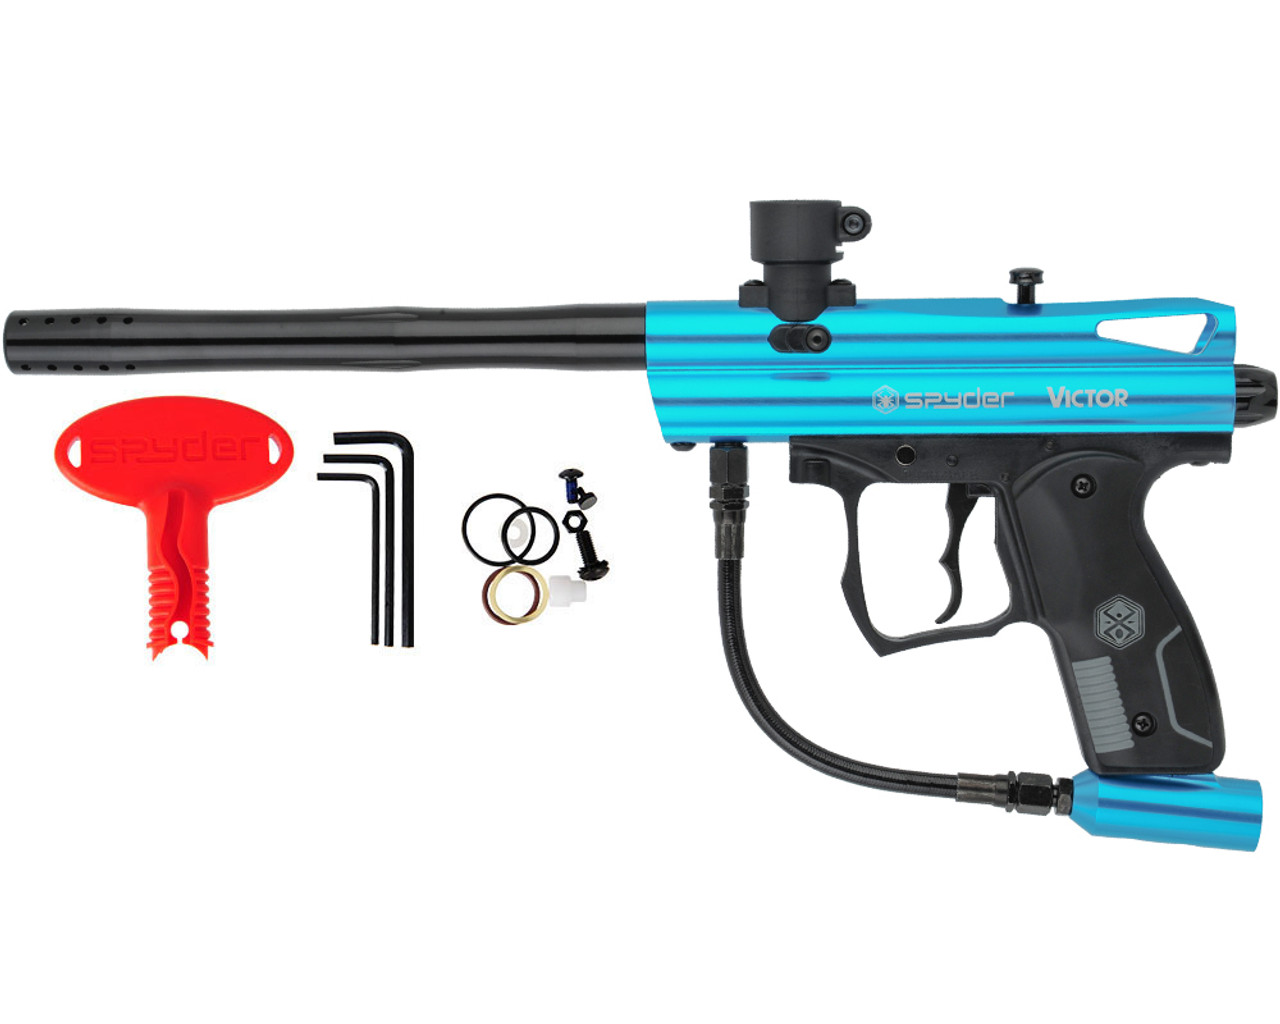 Kingman Spyder Victor Atomic Pickle Indoor Paintball Gun Kit